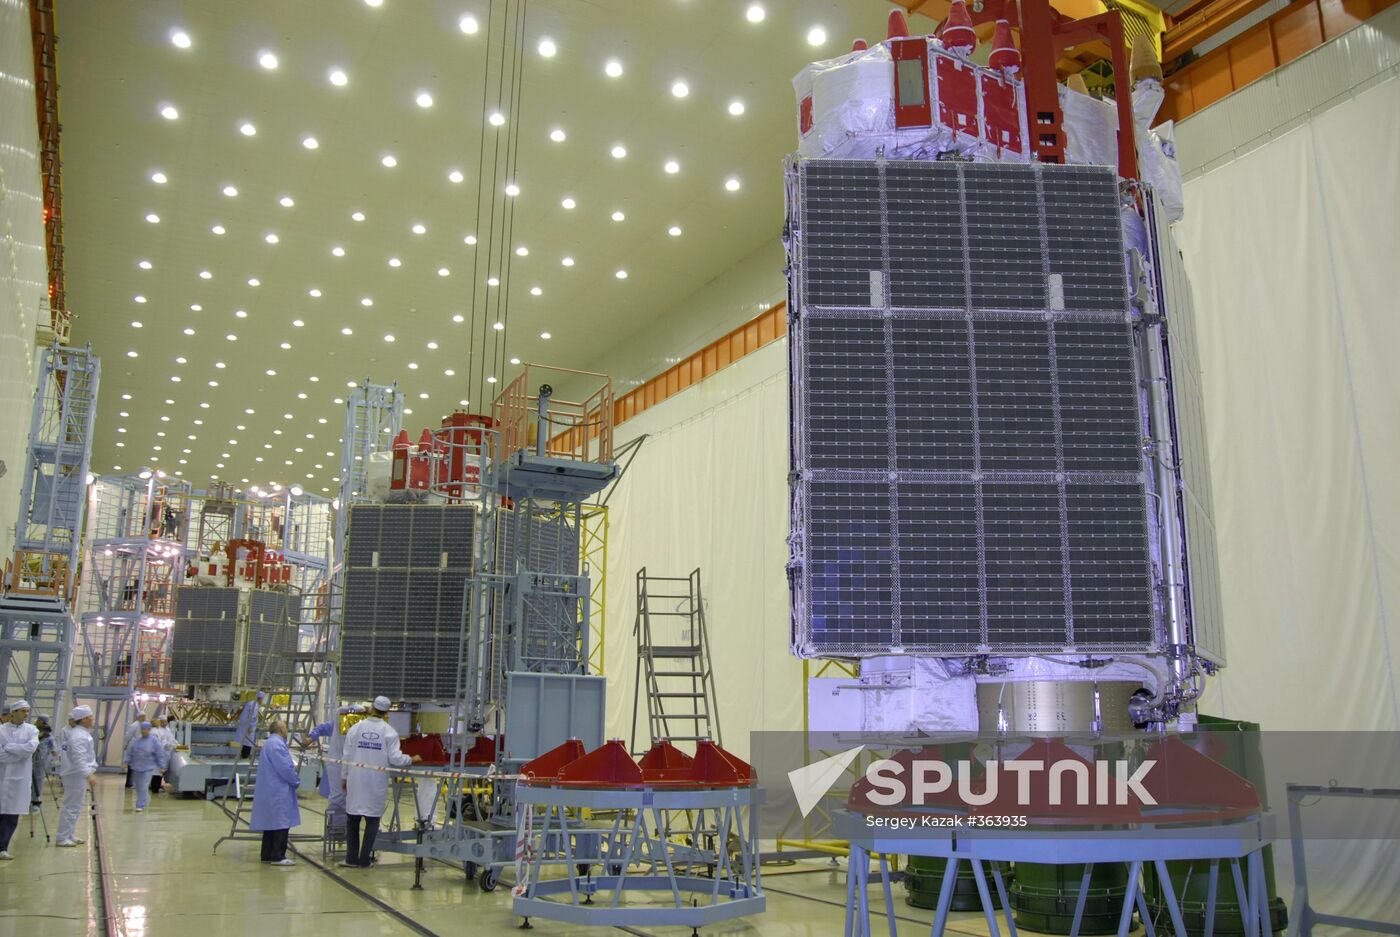 Glonass-M satellites prepared for launch from Baikonur